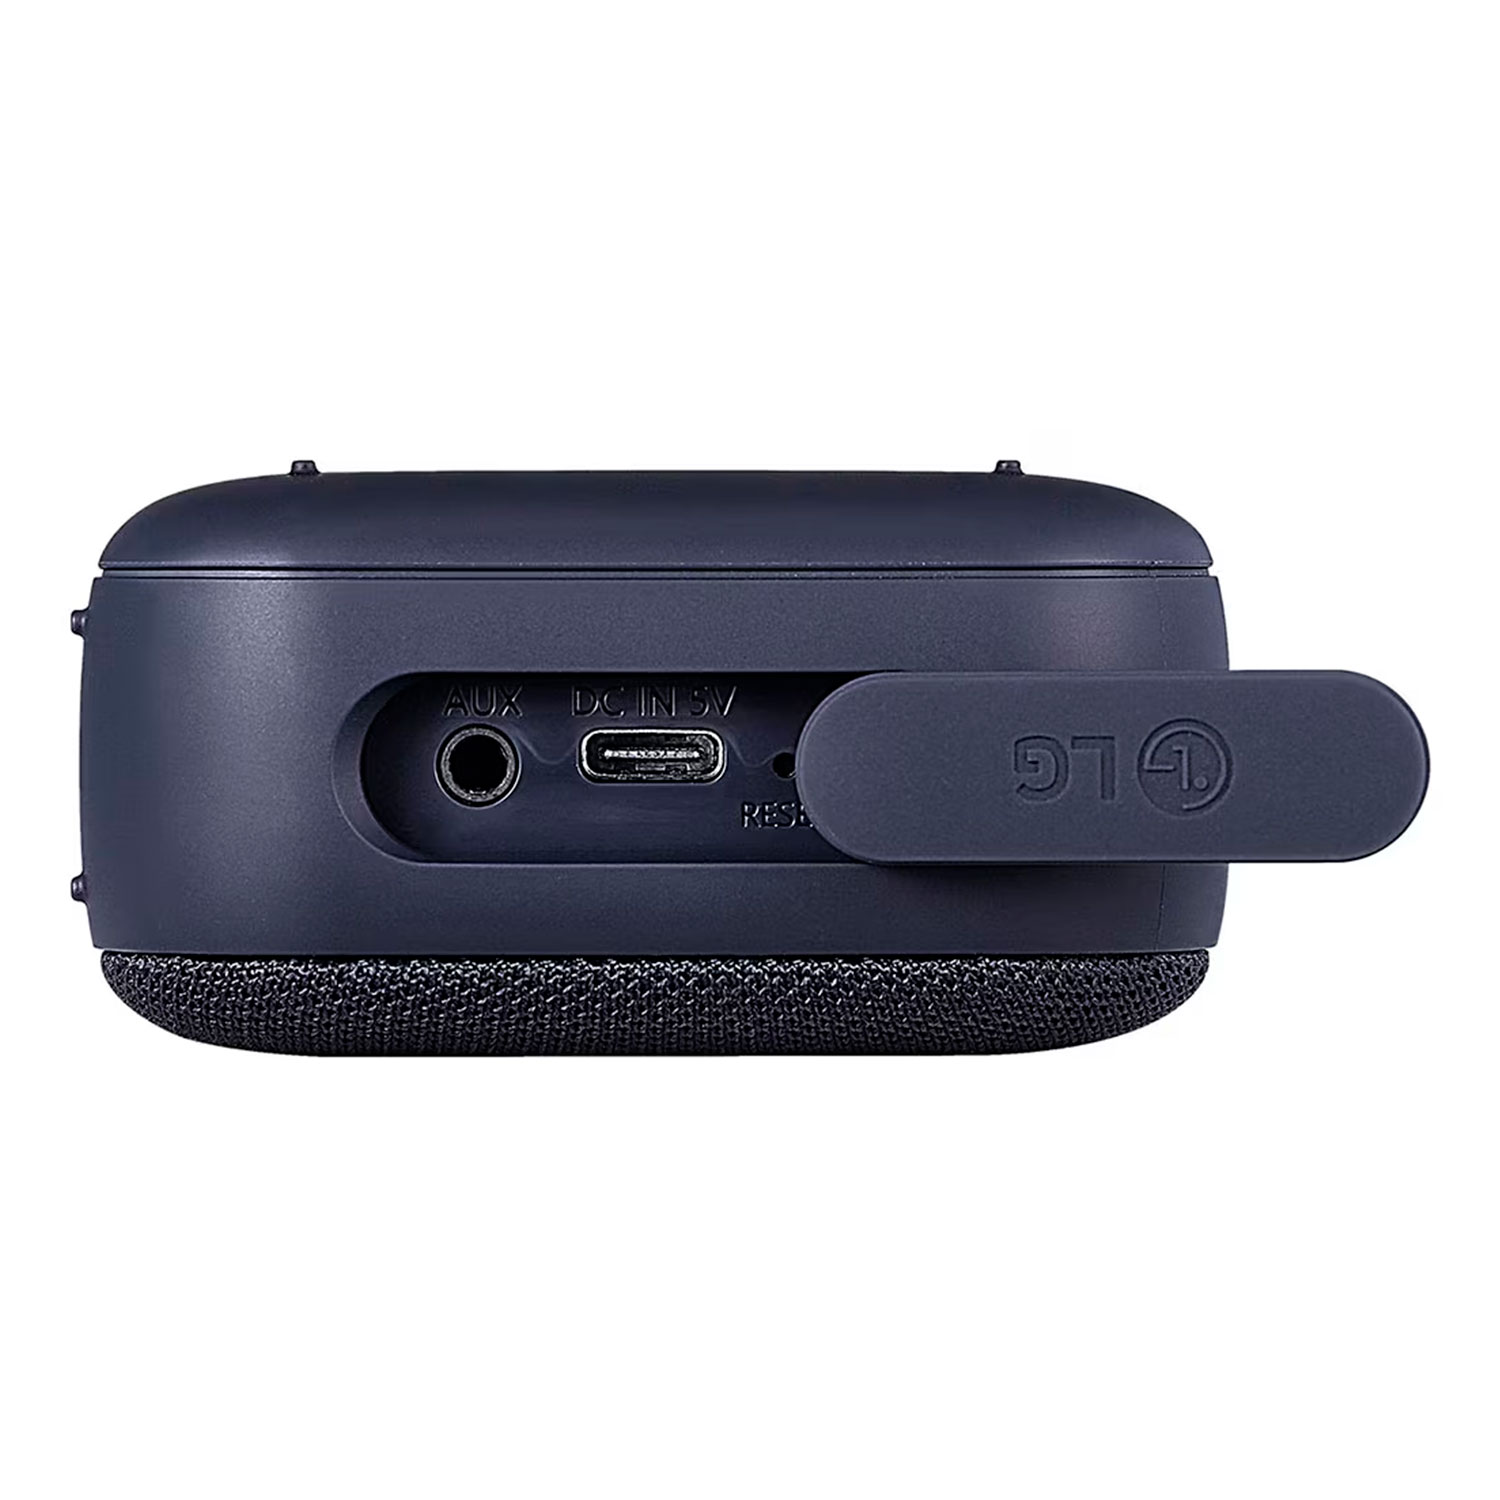 Speaker Portátil LG XBOOM Go PM1 Bluetooth - Preto